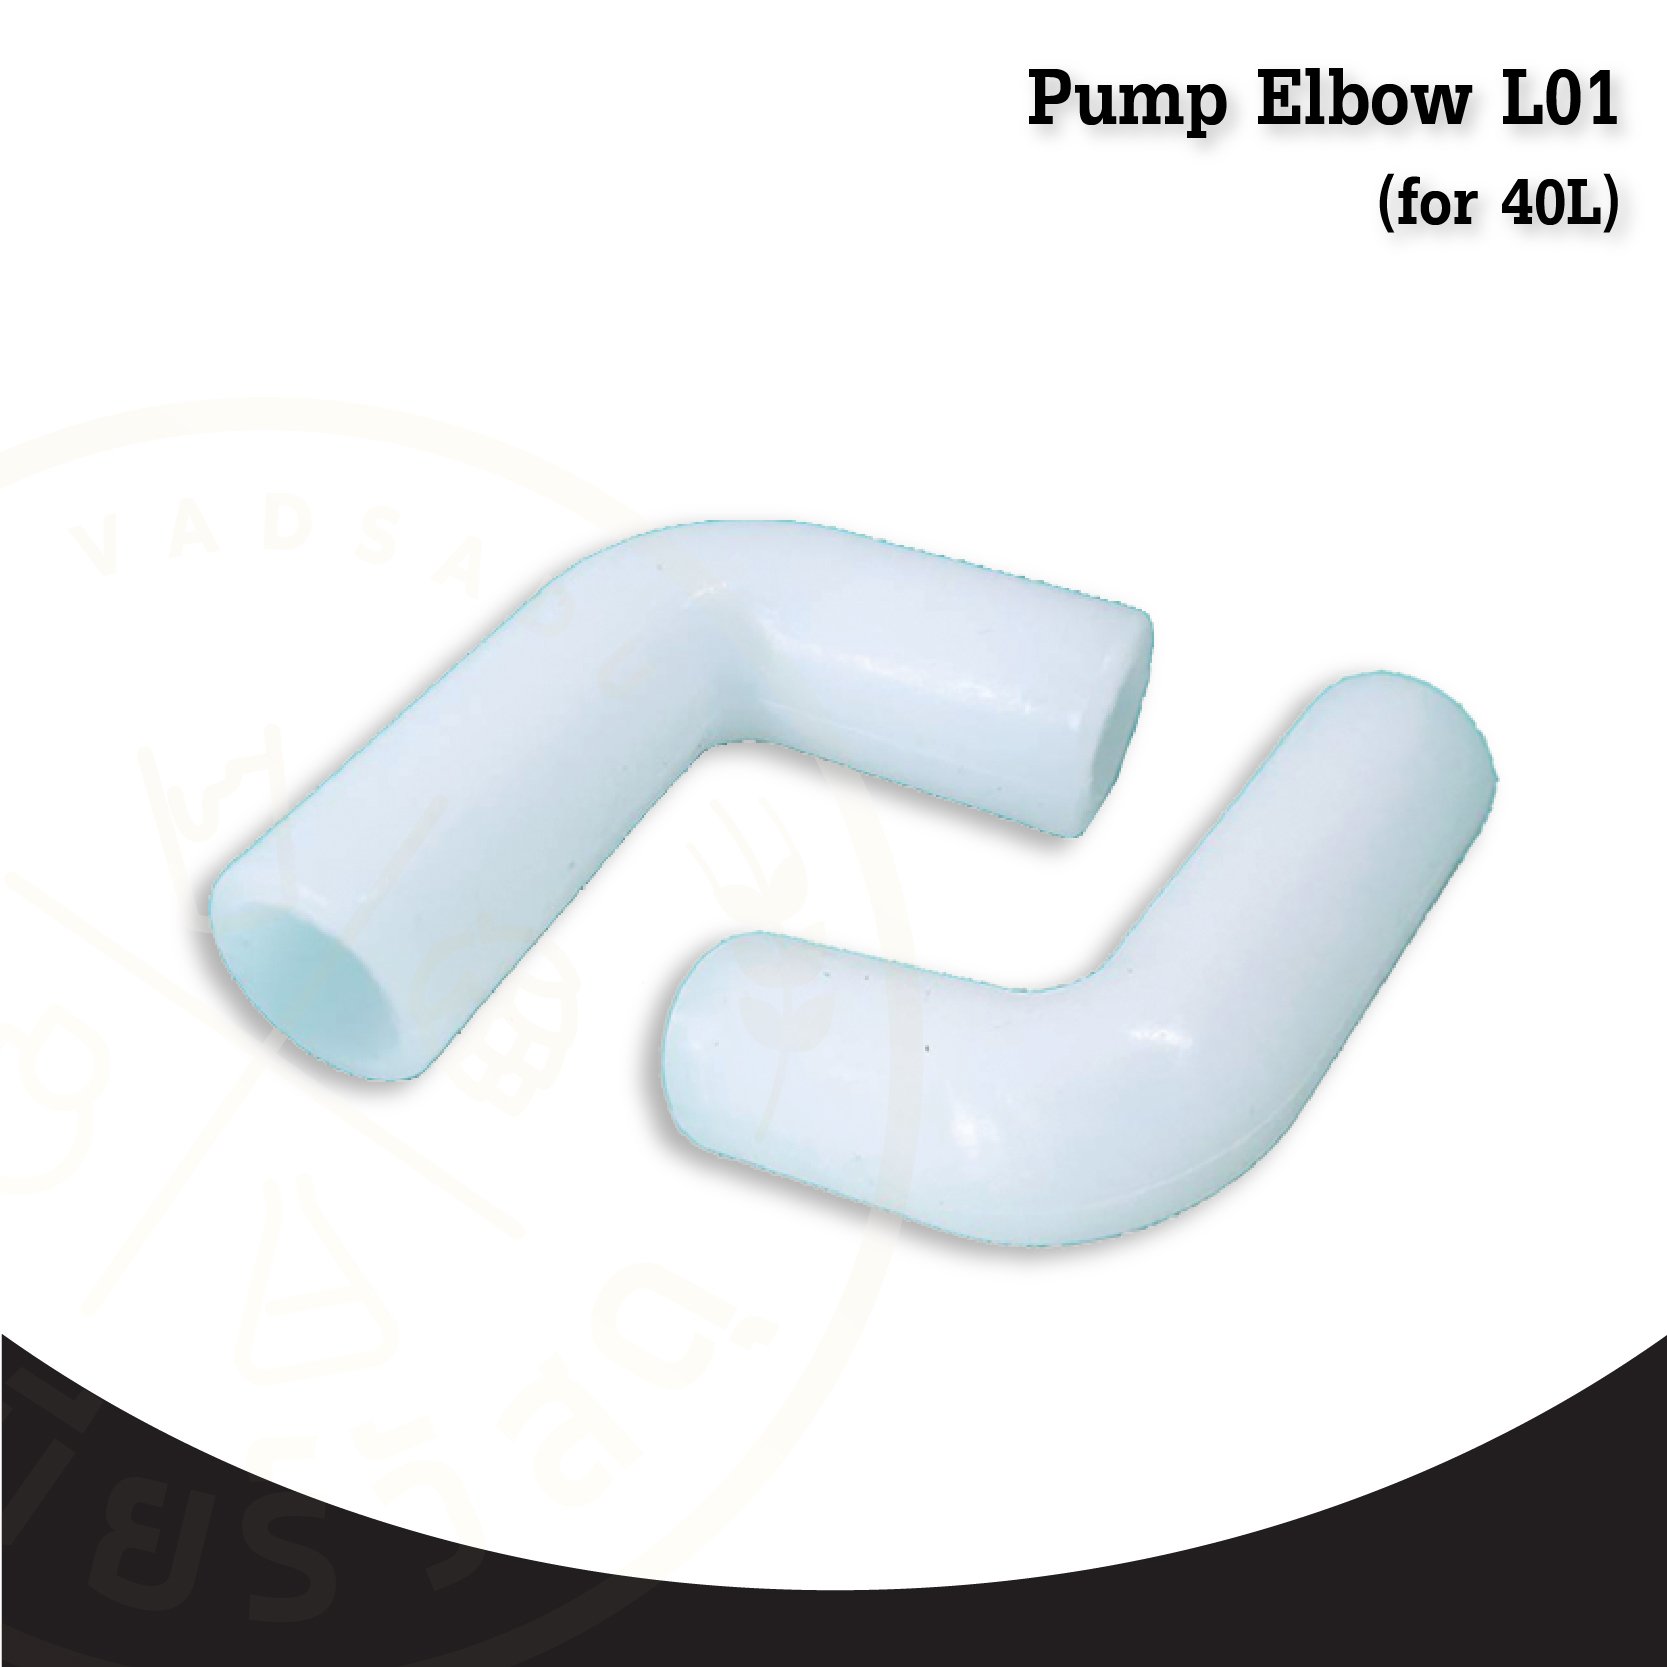 Guten 70L pump elbow L01